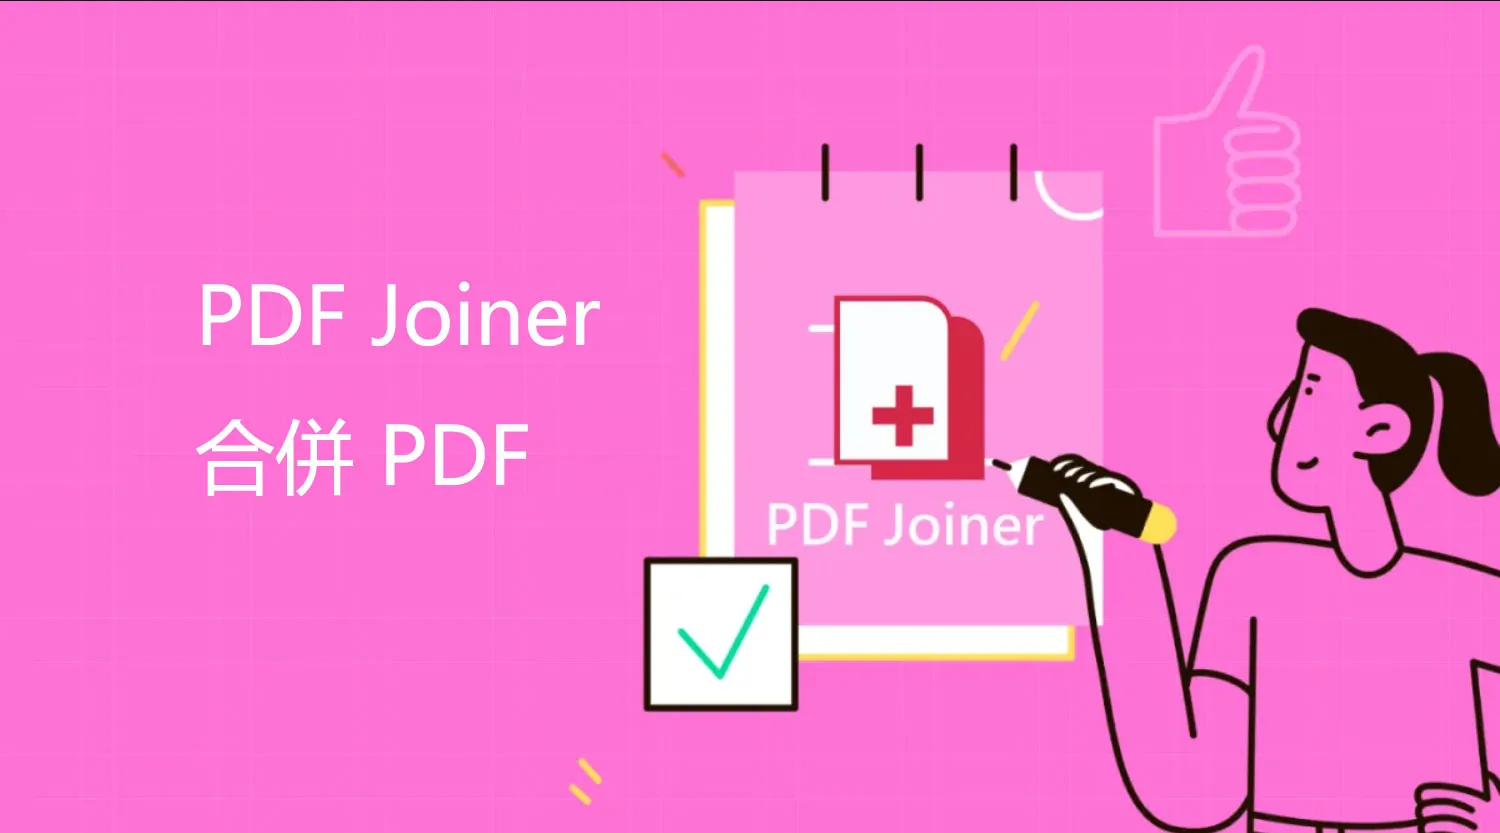 PDF Joiner 合併 PDF 怎麼樣？有沒有更好的替代方案？